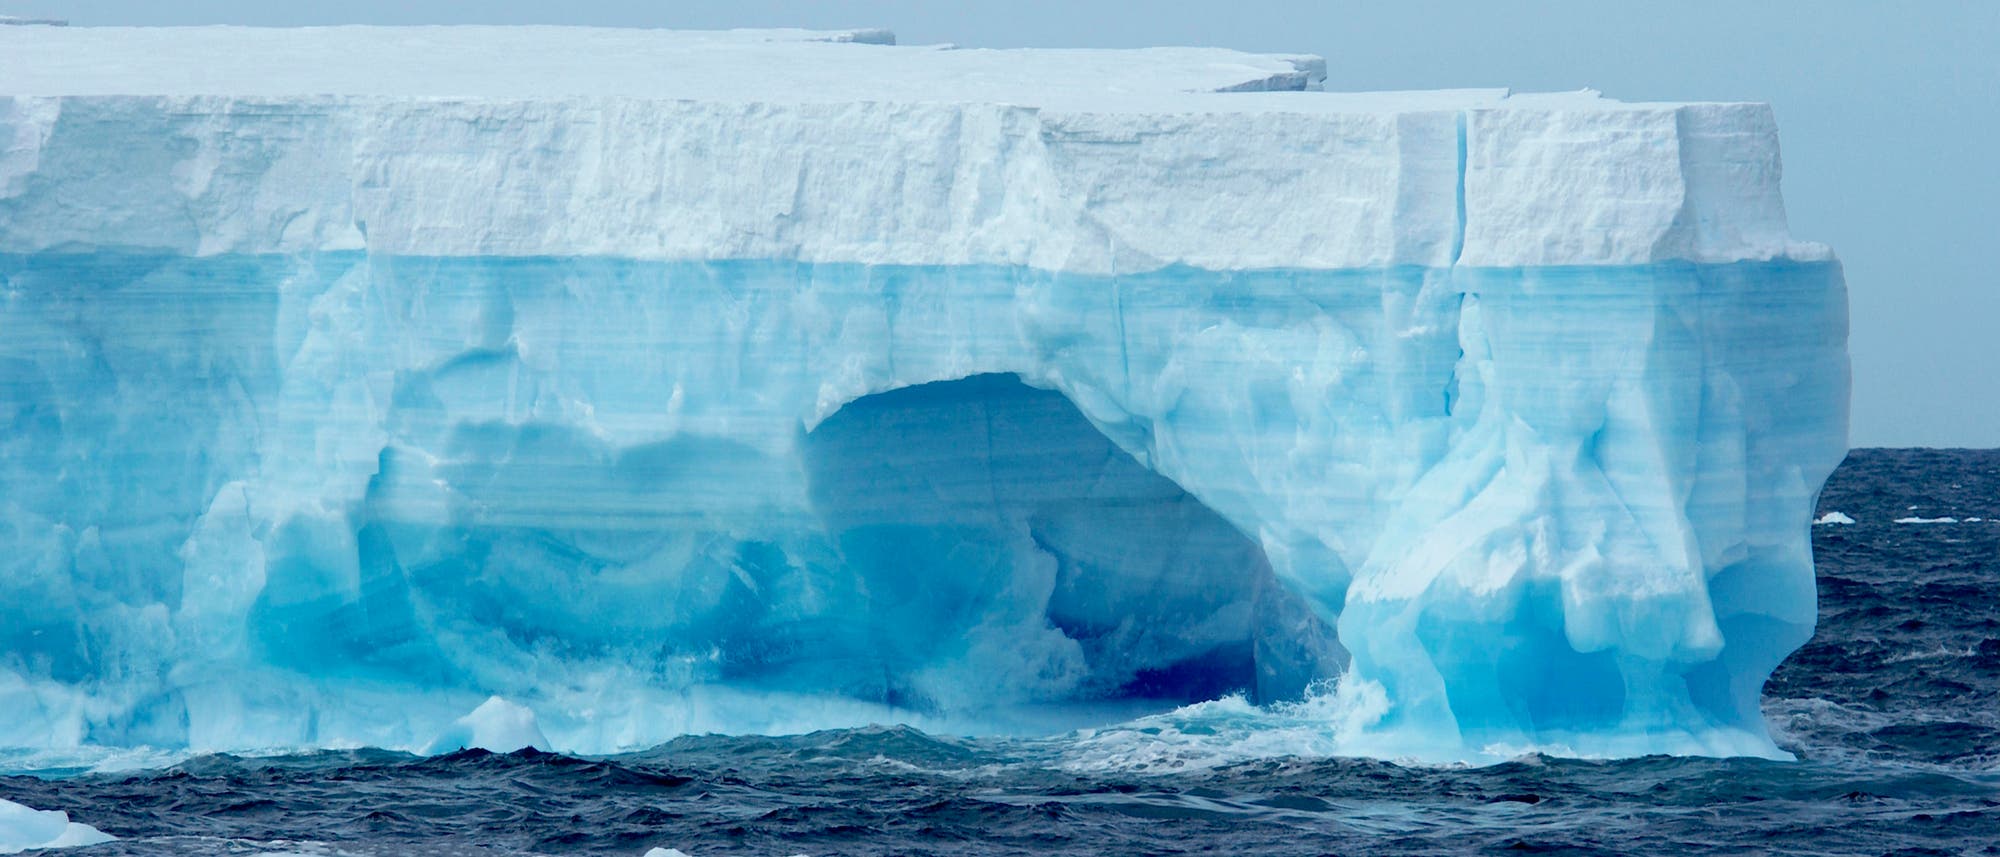 Geodinámica: la enorme plataforma de hielo rebota a diario